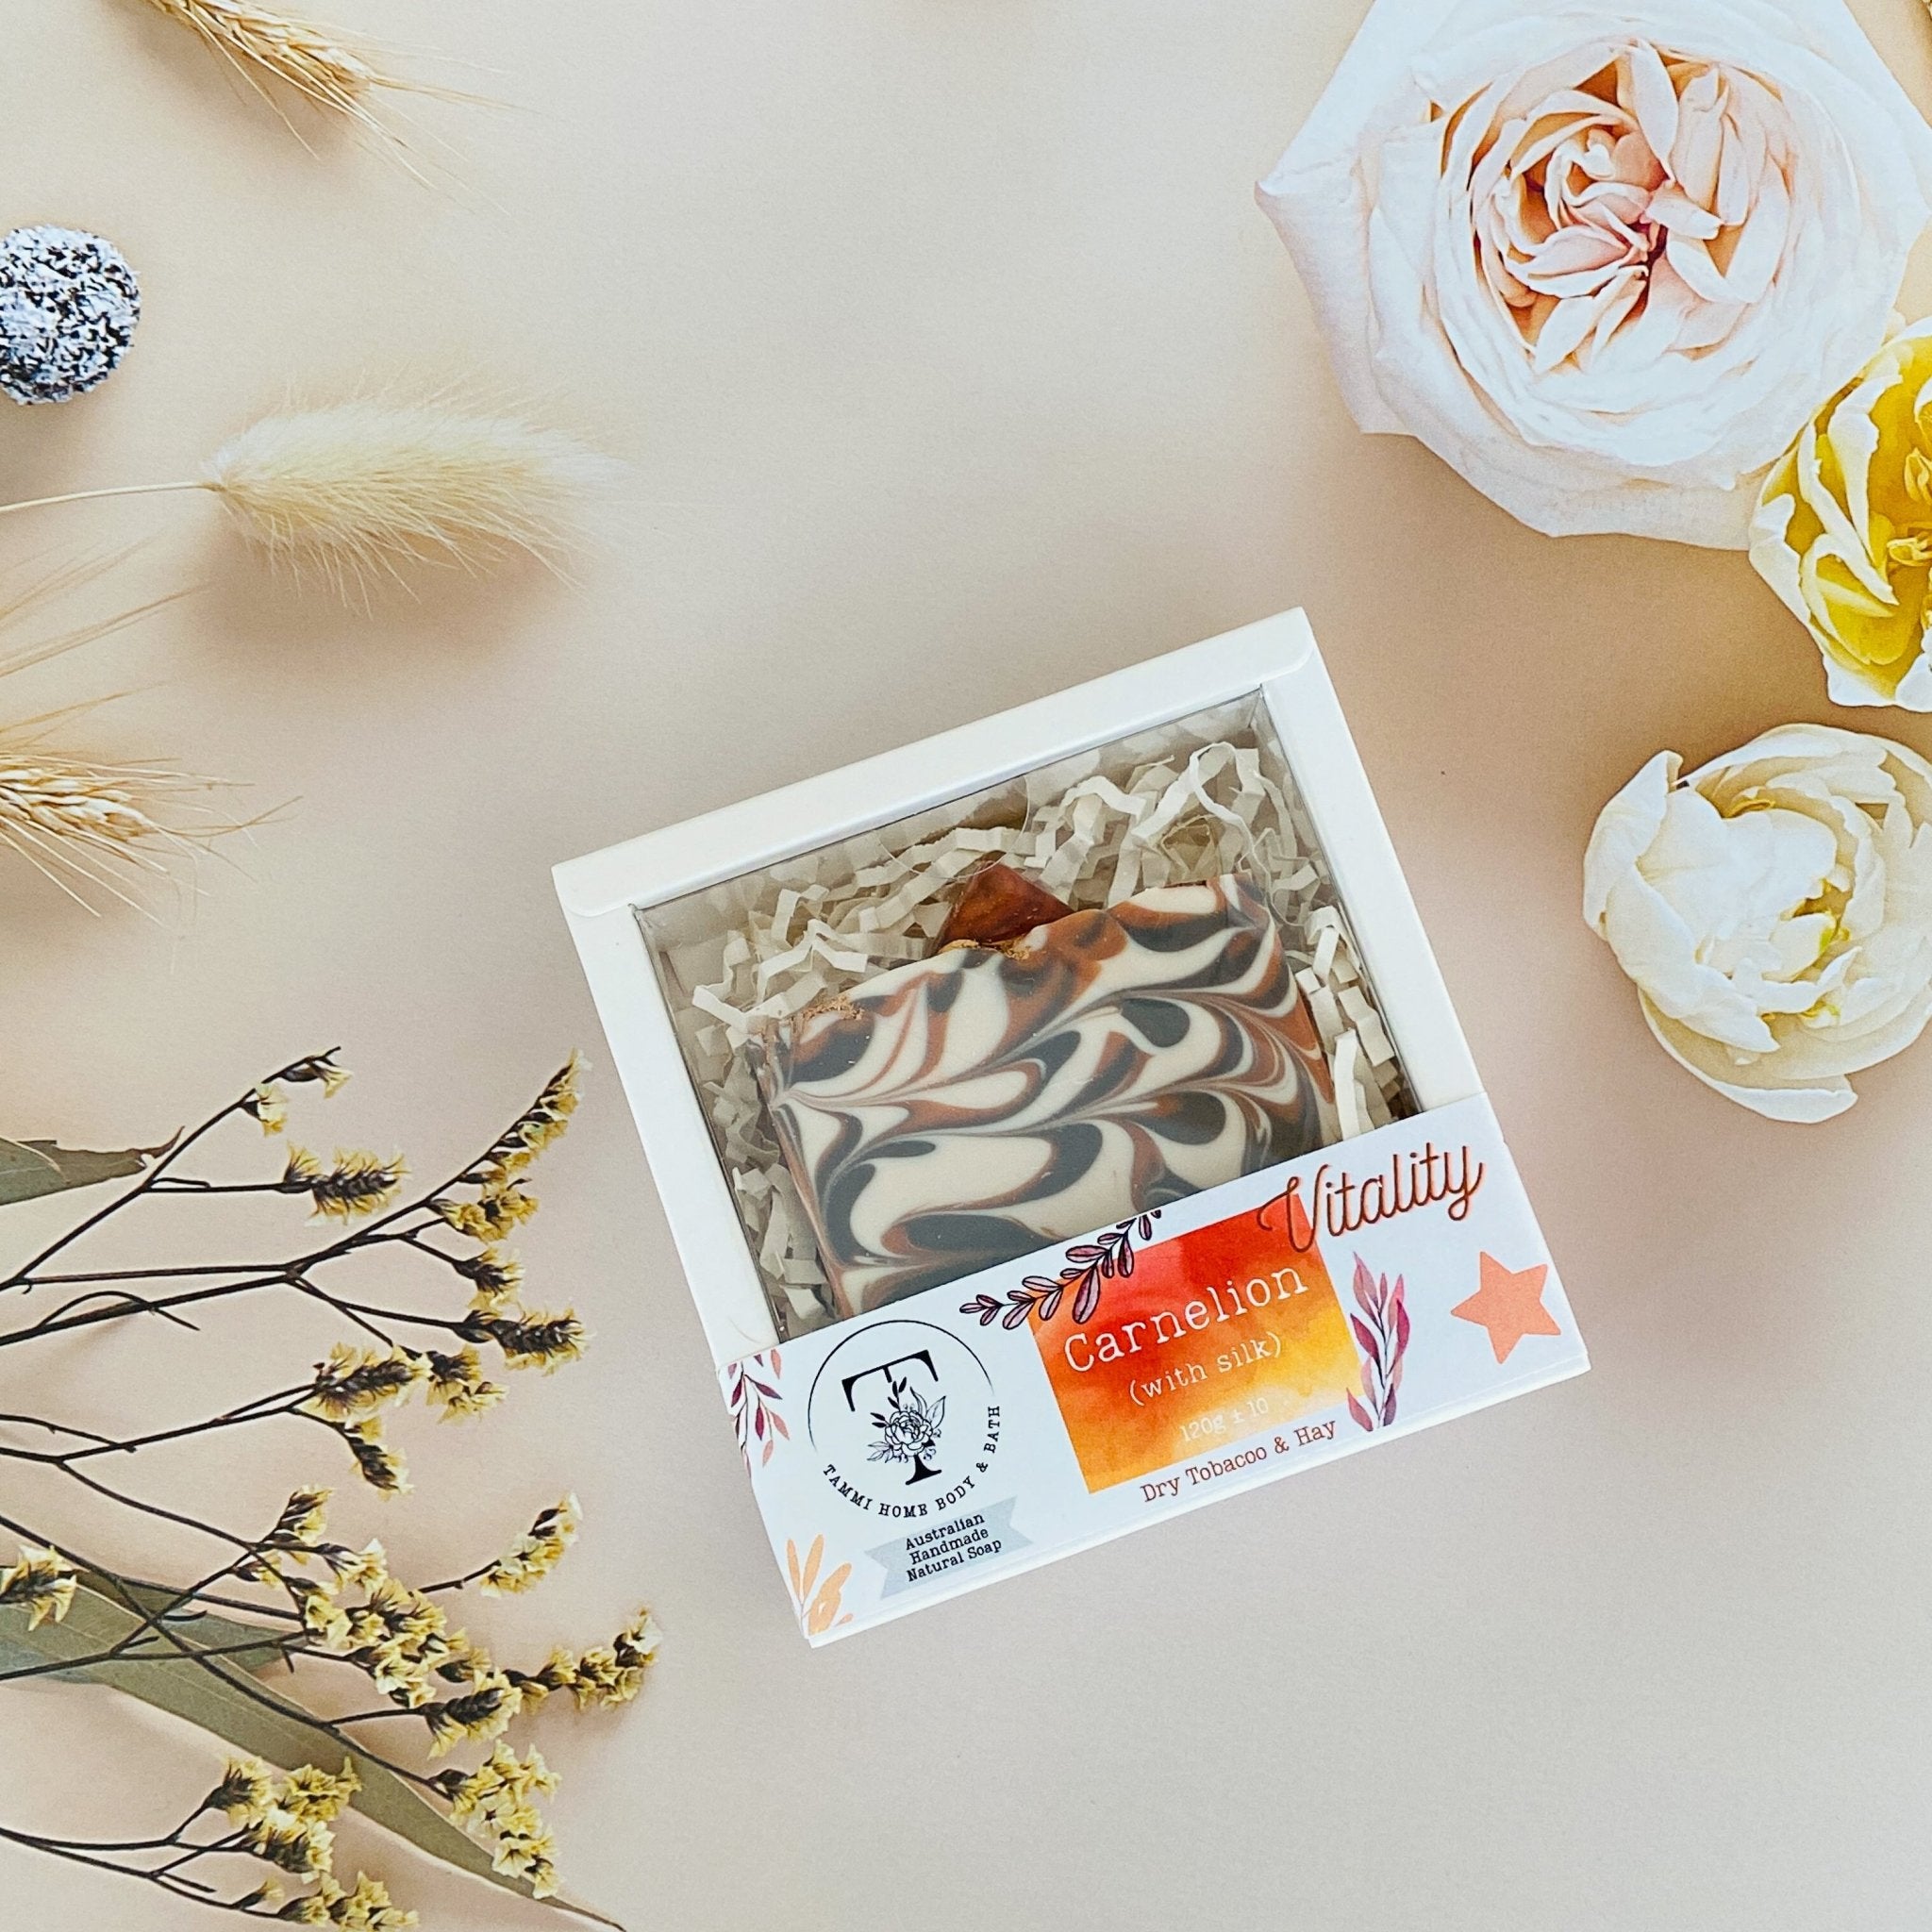 Luxury Artisanal Handmade Soap | Carnelion Gemstone with Silk | Dry Tobacco & Hay Scent - Tammi Home